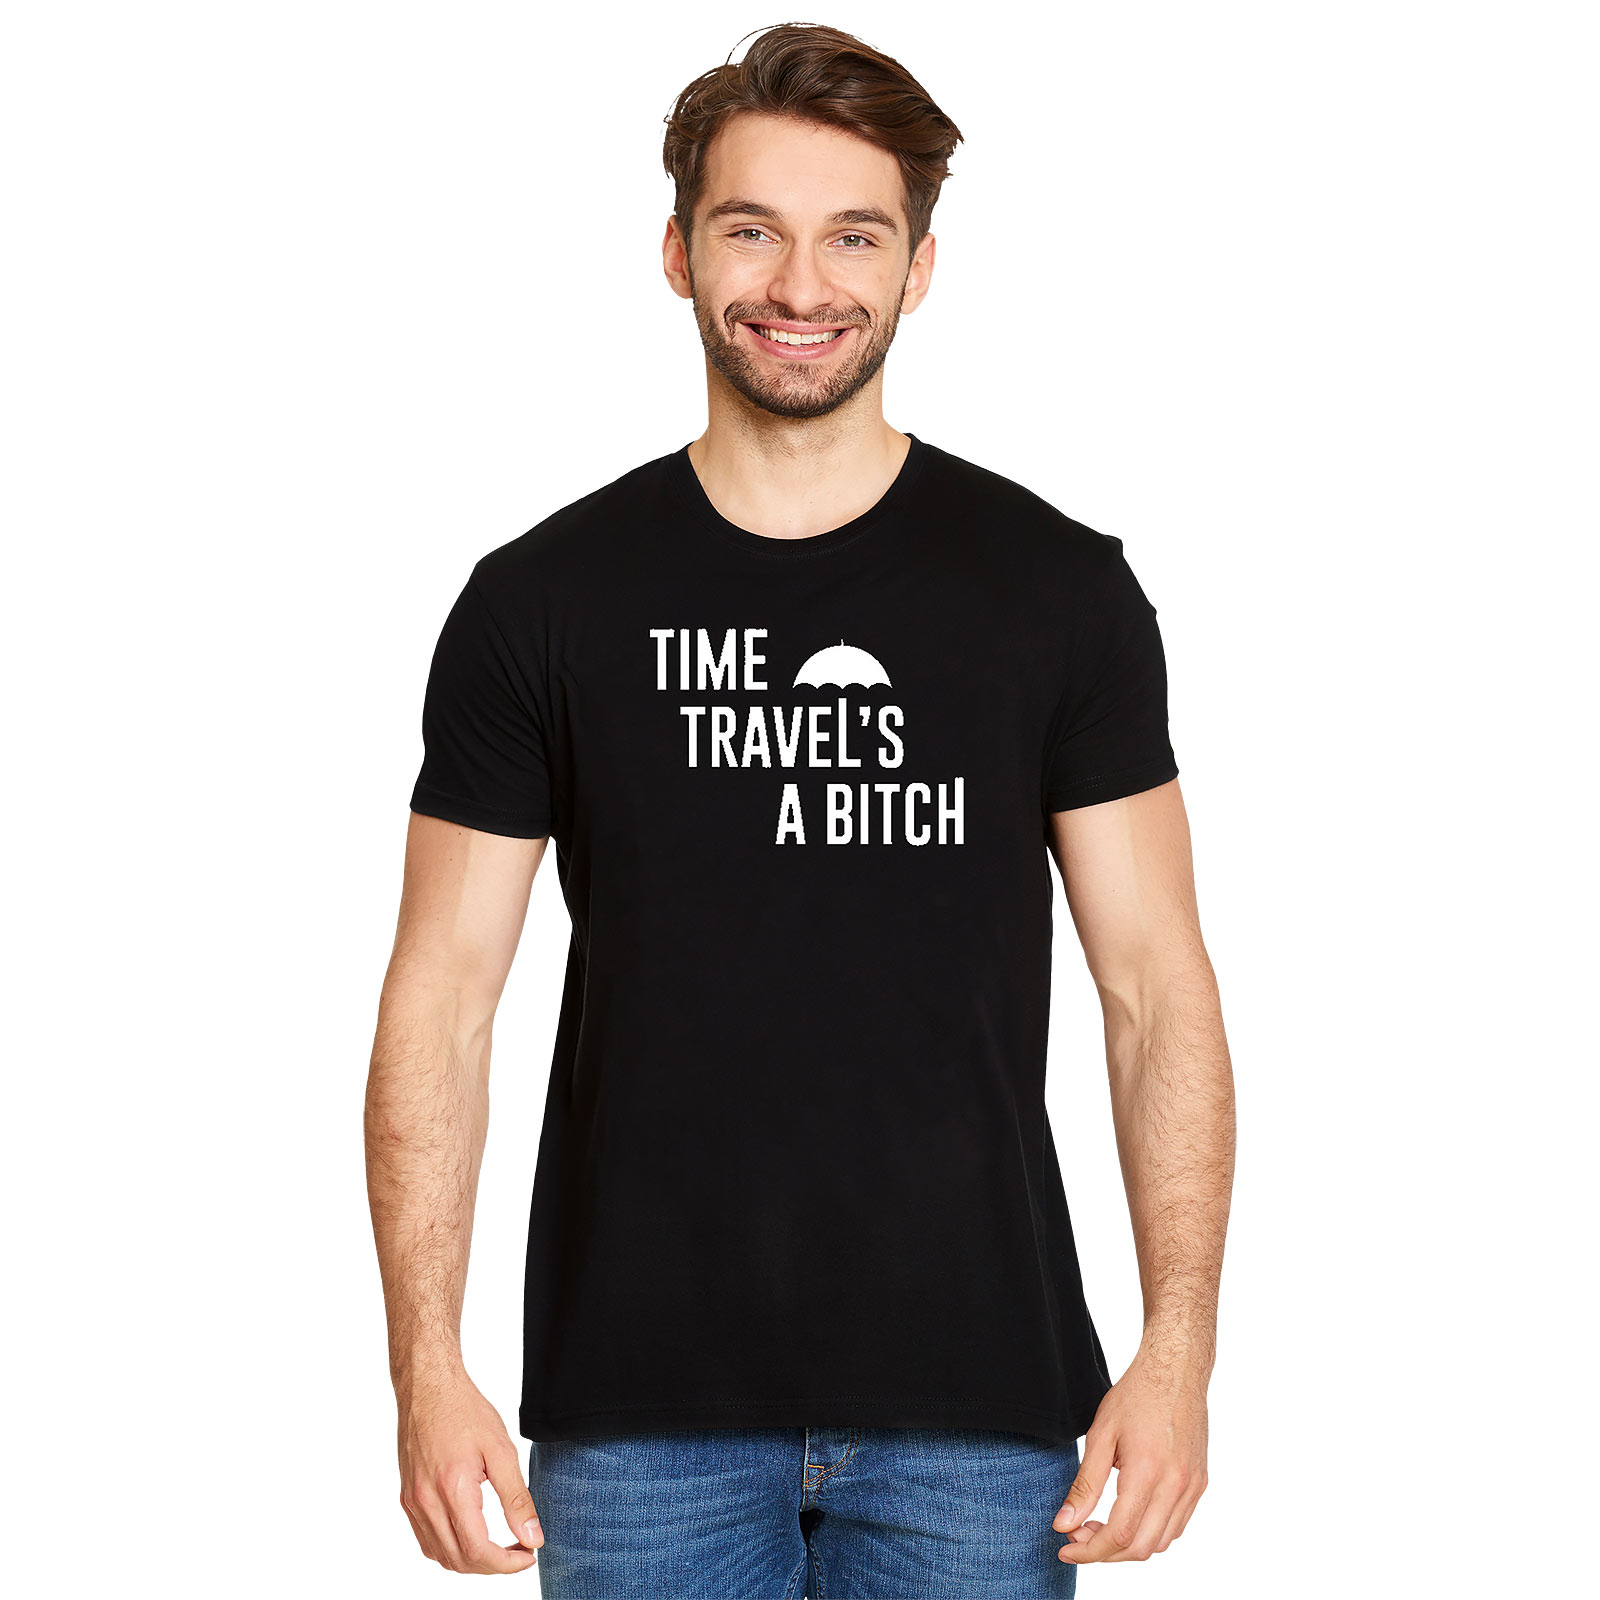 Time Travel's a Bitch T-shirt voor fans van The Umbrella Academy